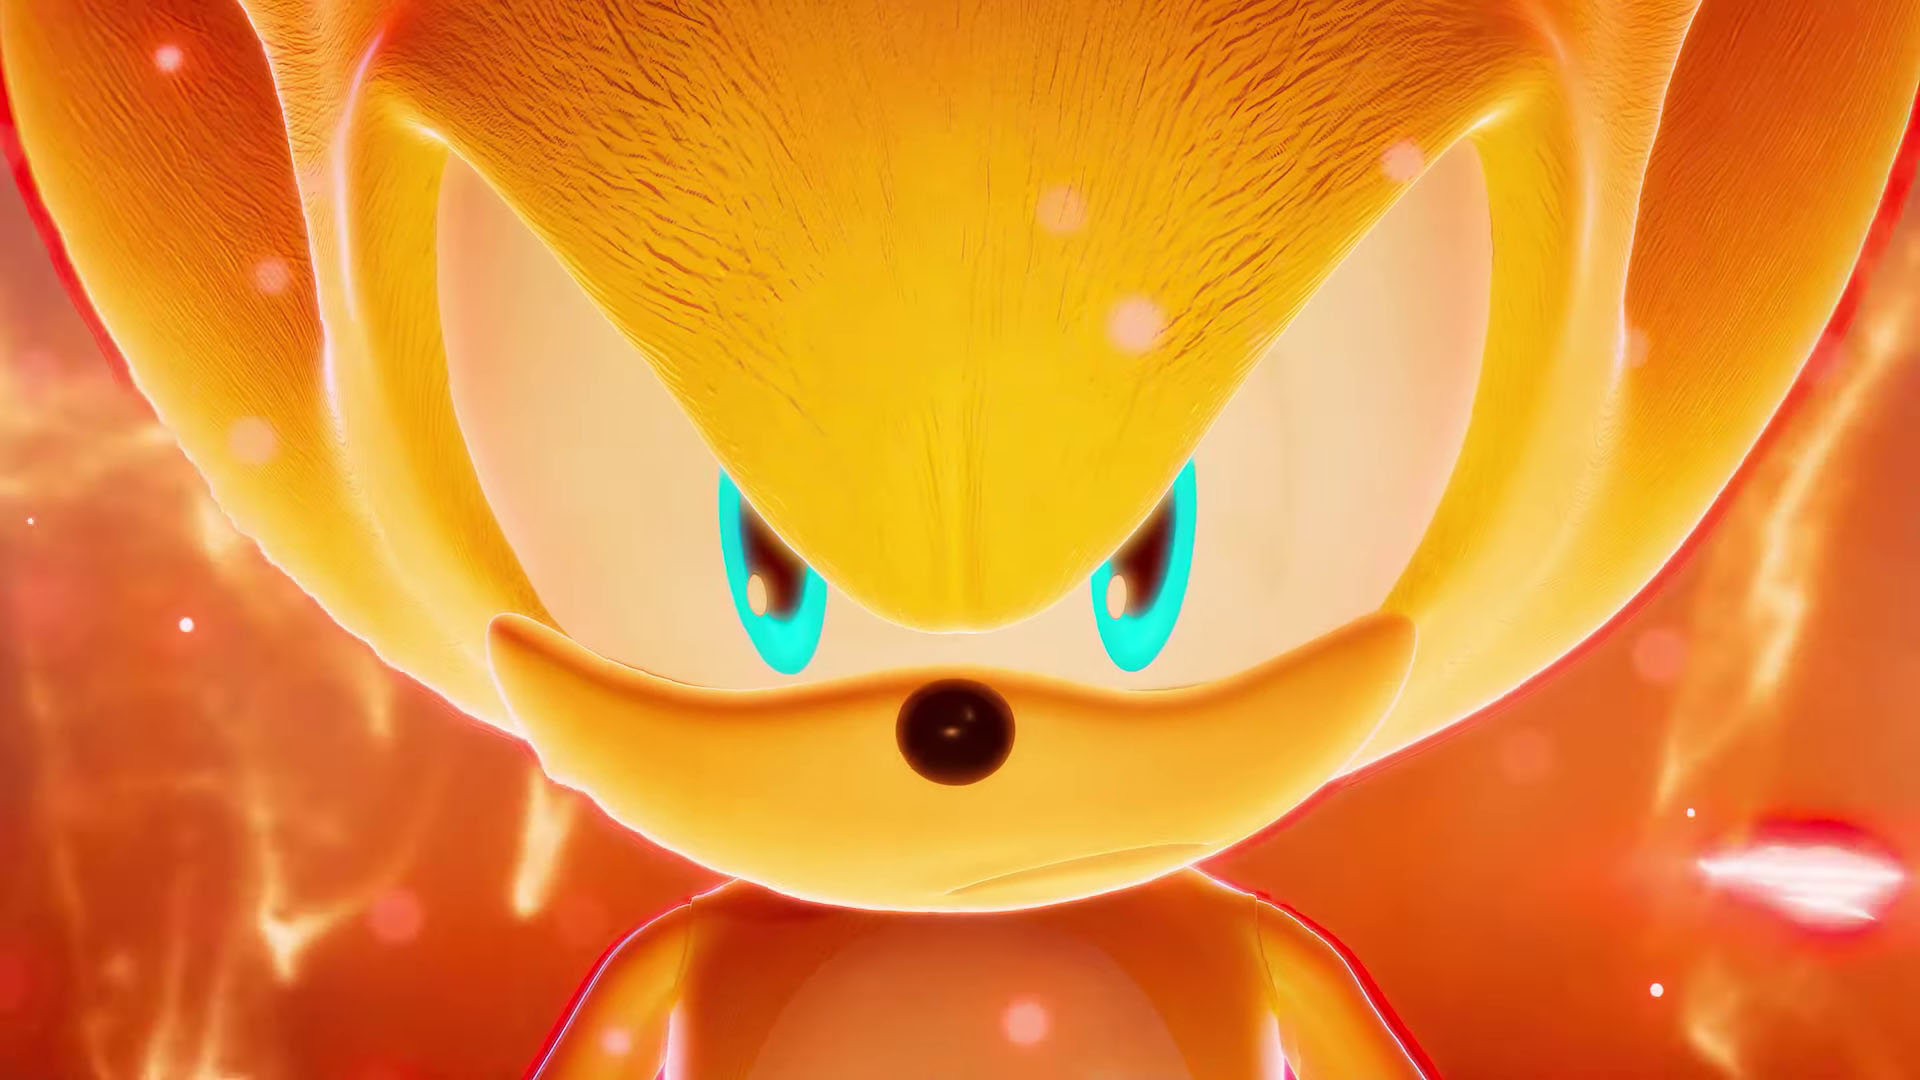 Sonic Adventure remake is finally on the horizon